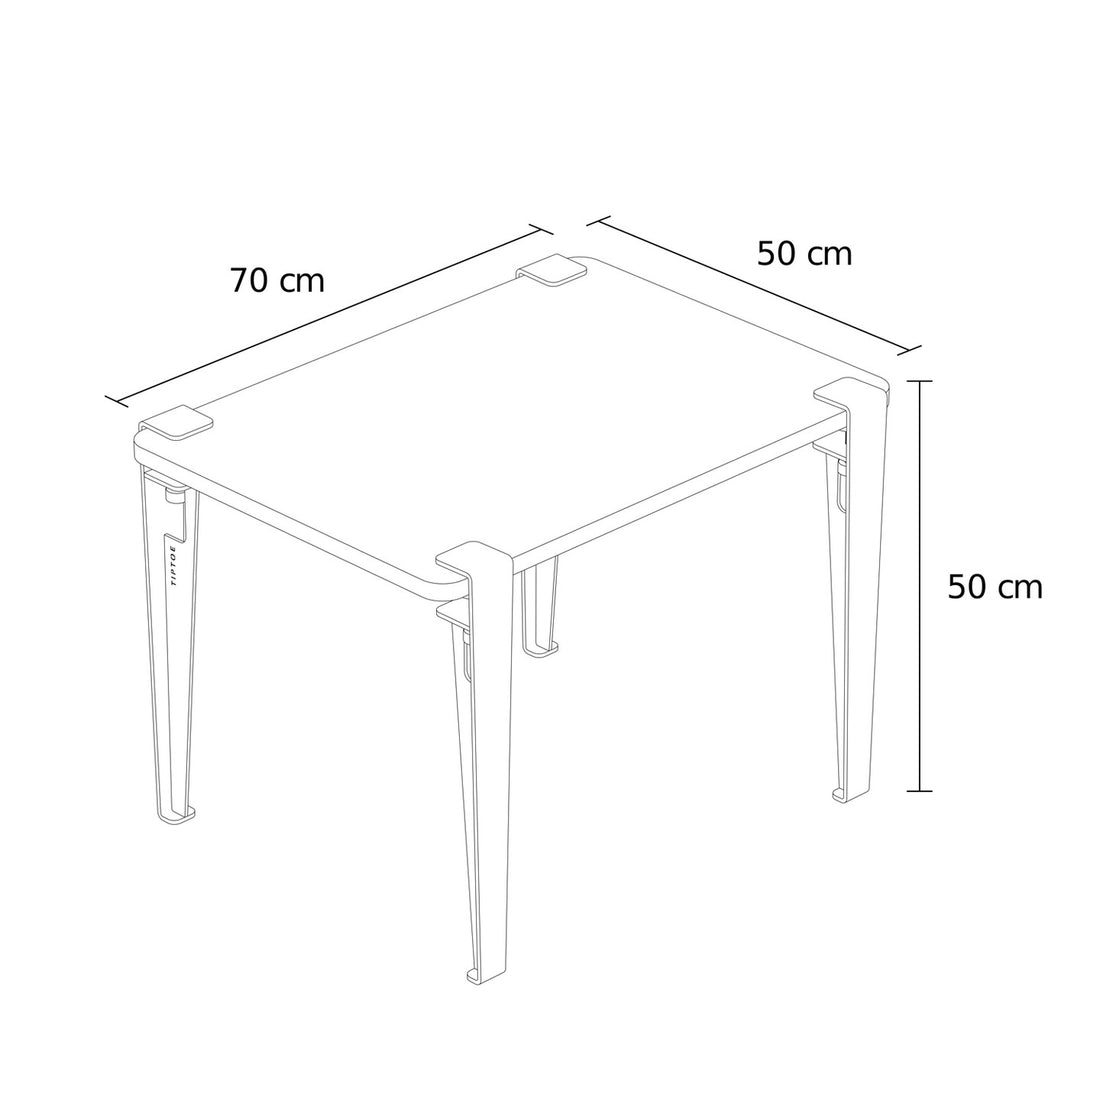 tiptoe-kids-desk-virce-versa-blackboard-&-white-tabletop-with-legs-cloudy-white-70x50cm-tipt-stt07005023p02-tle050st1mz100 (11)